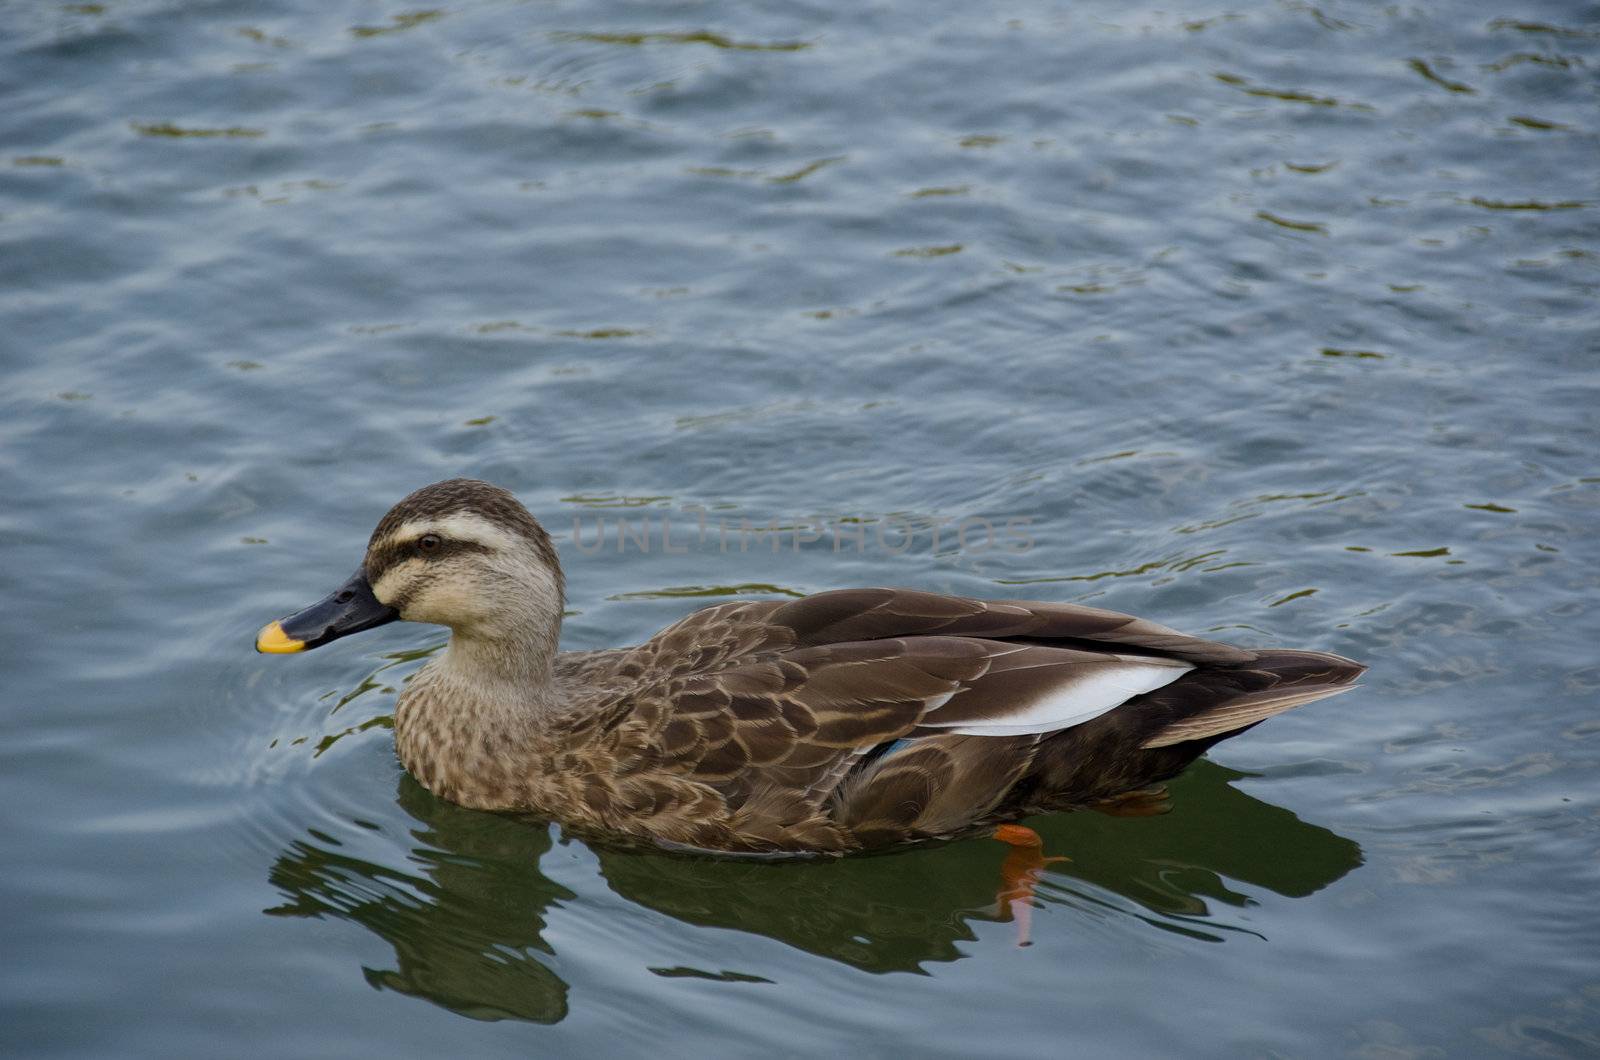  Spot-billed Duck, Anas poecilorhyncha by Arrxxx